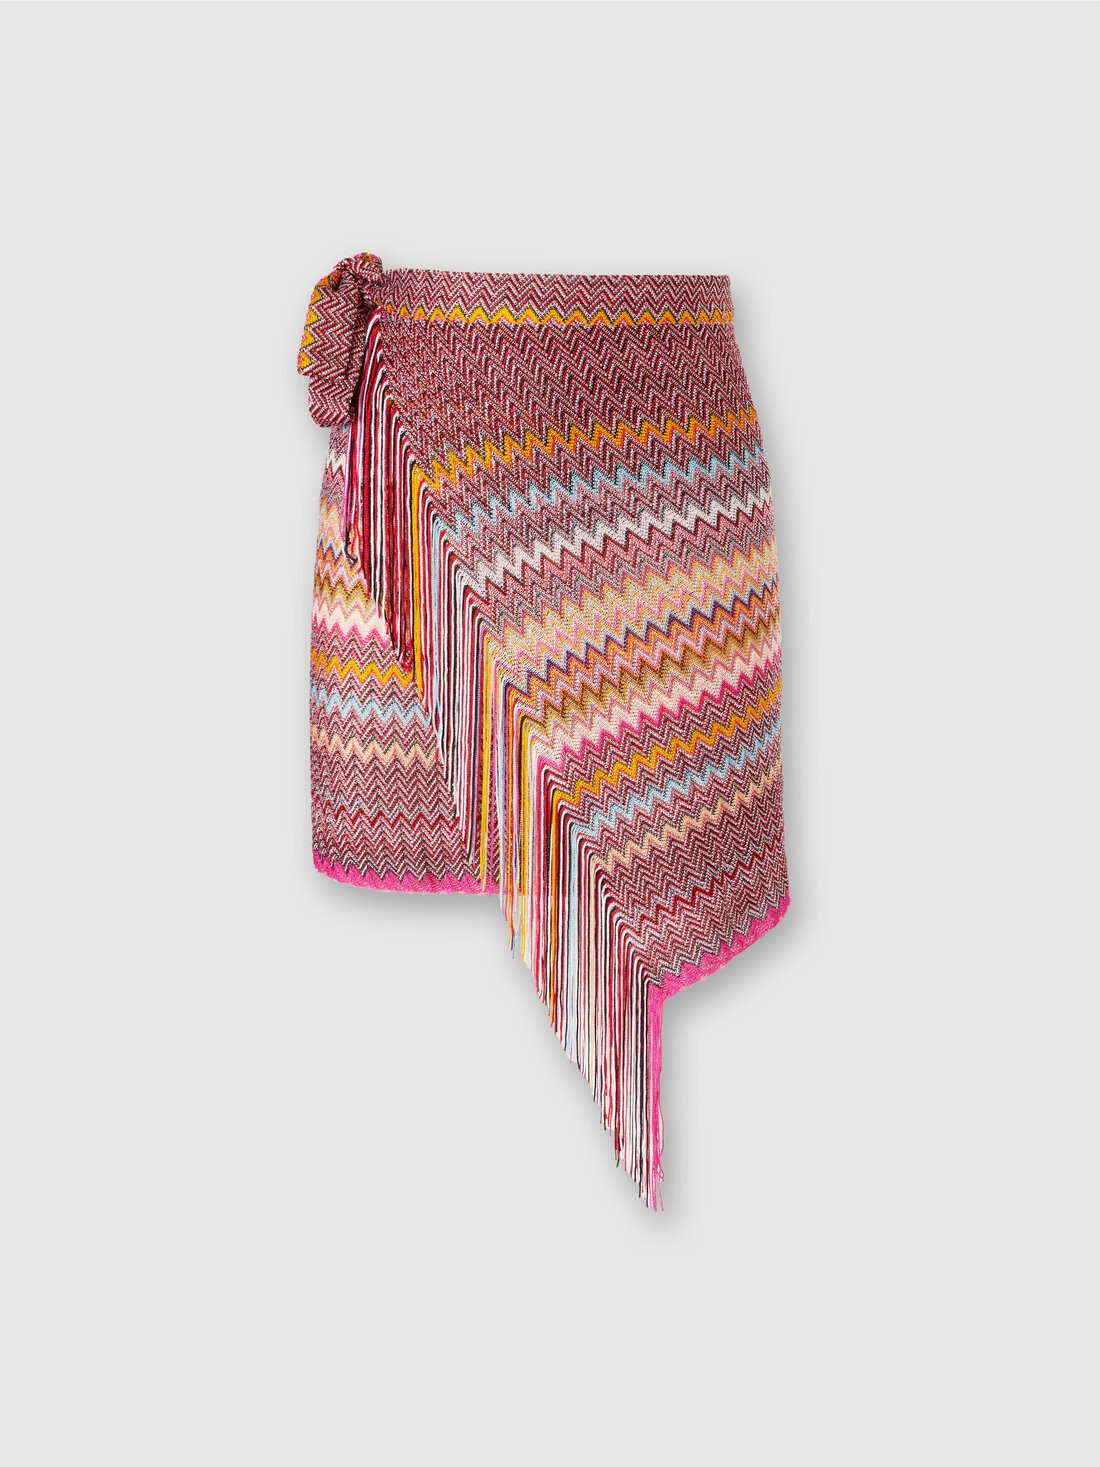 Zigzag viscose knit sarong with fringes, Multicoloured  - 8053147142128 - 0